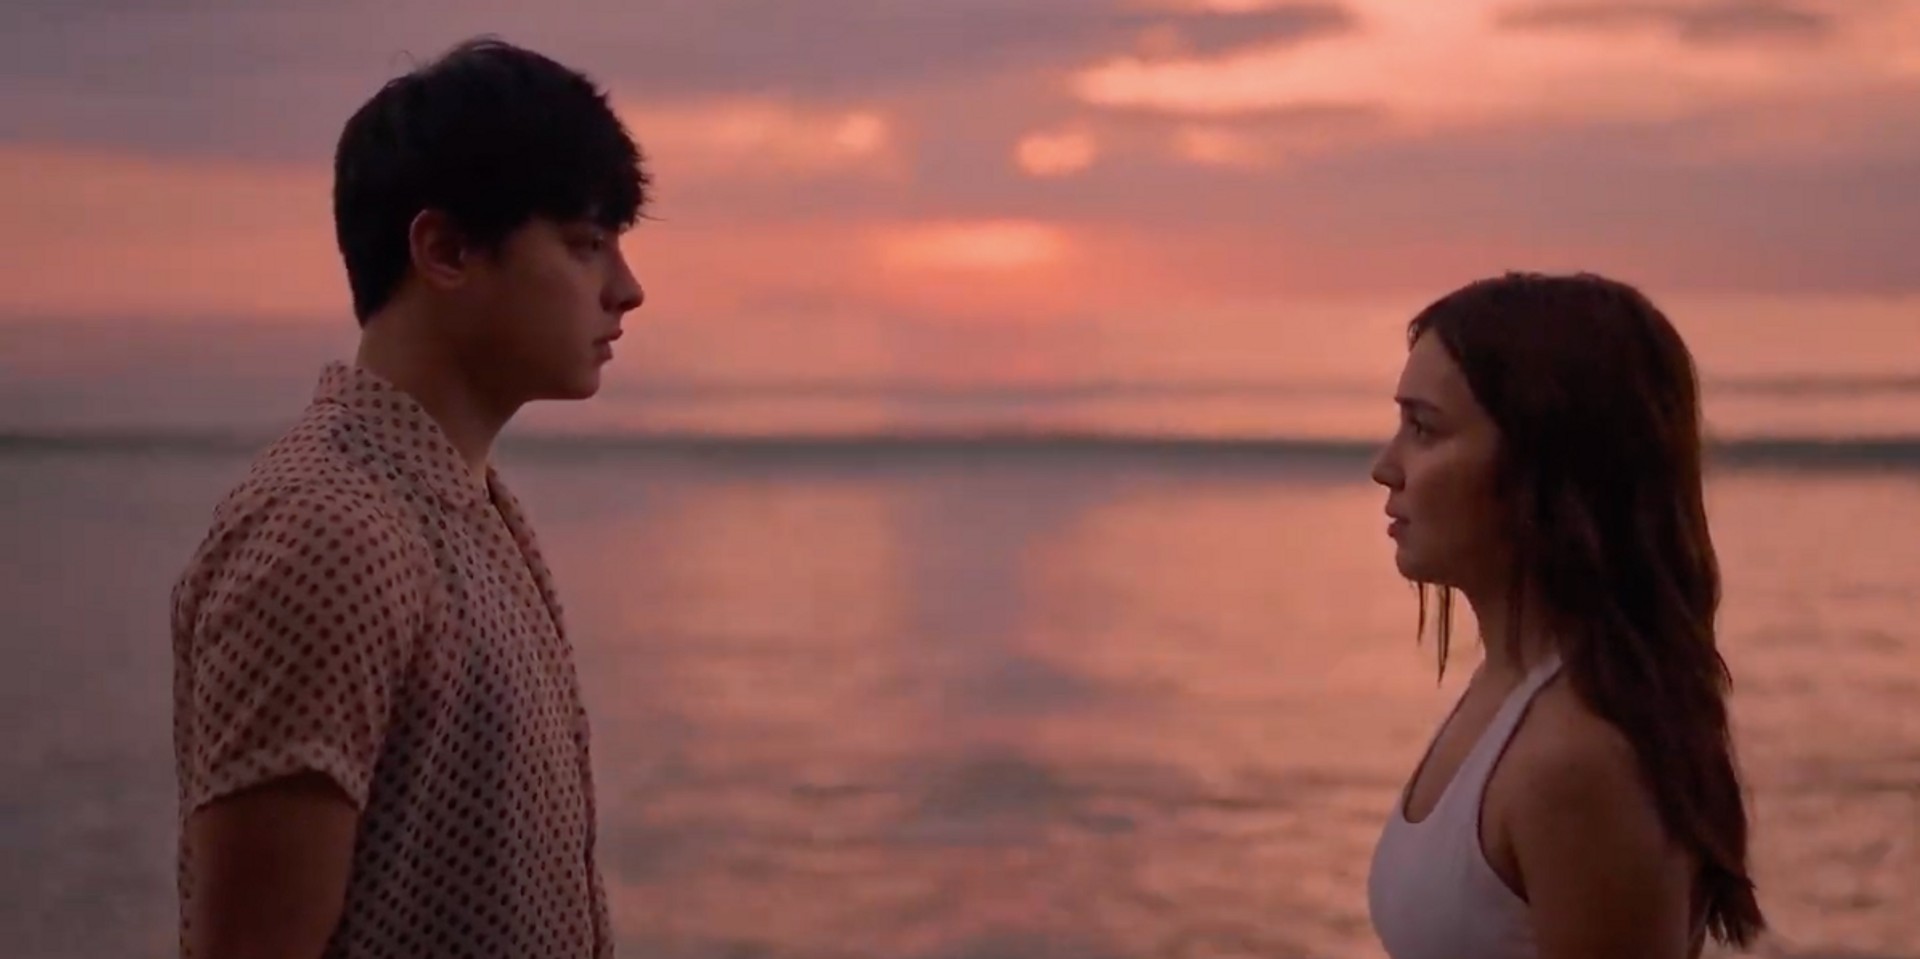 Ben&Ben unveil 'Sa Susunod Na Habang Buhay' music video, starring Daniel Padilla and Kathryn Bernardo, written by Juan Miguel Severo - watch 